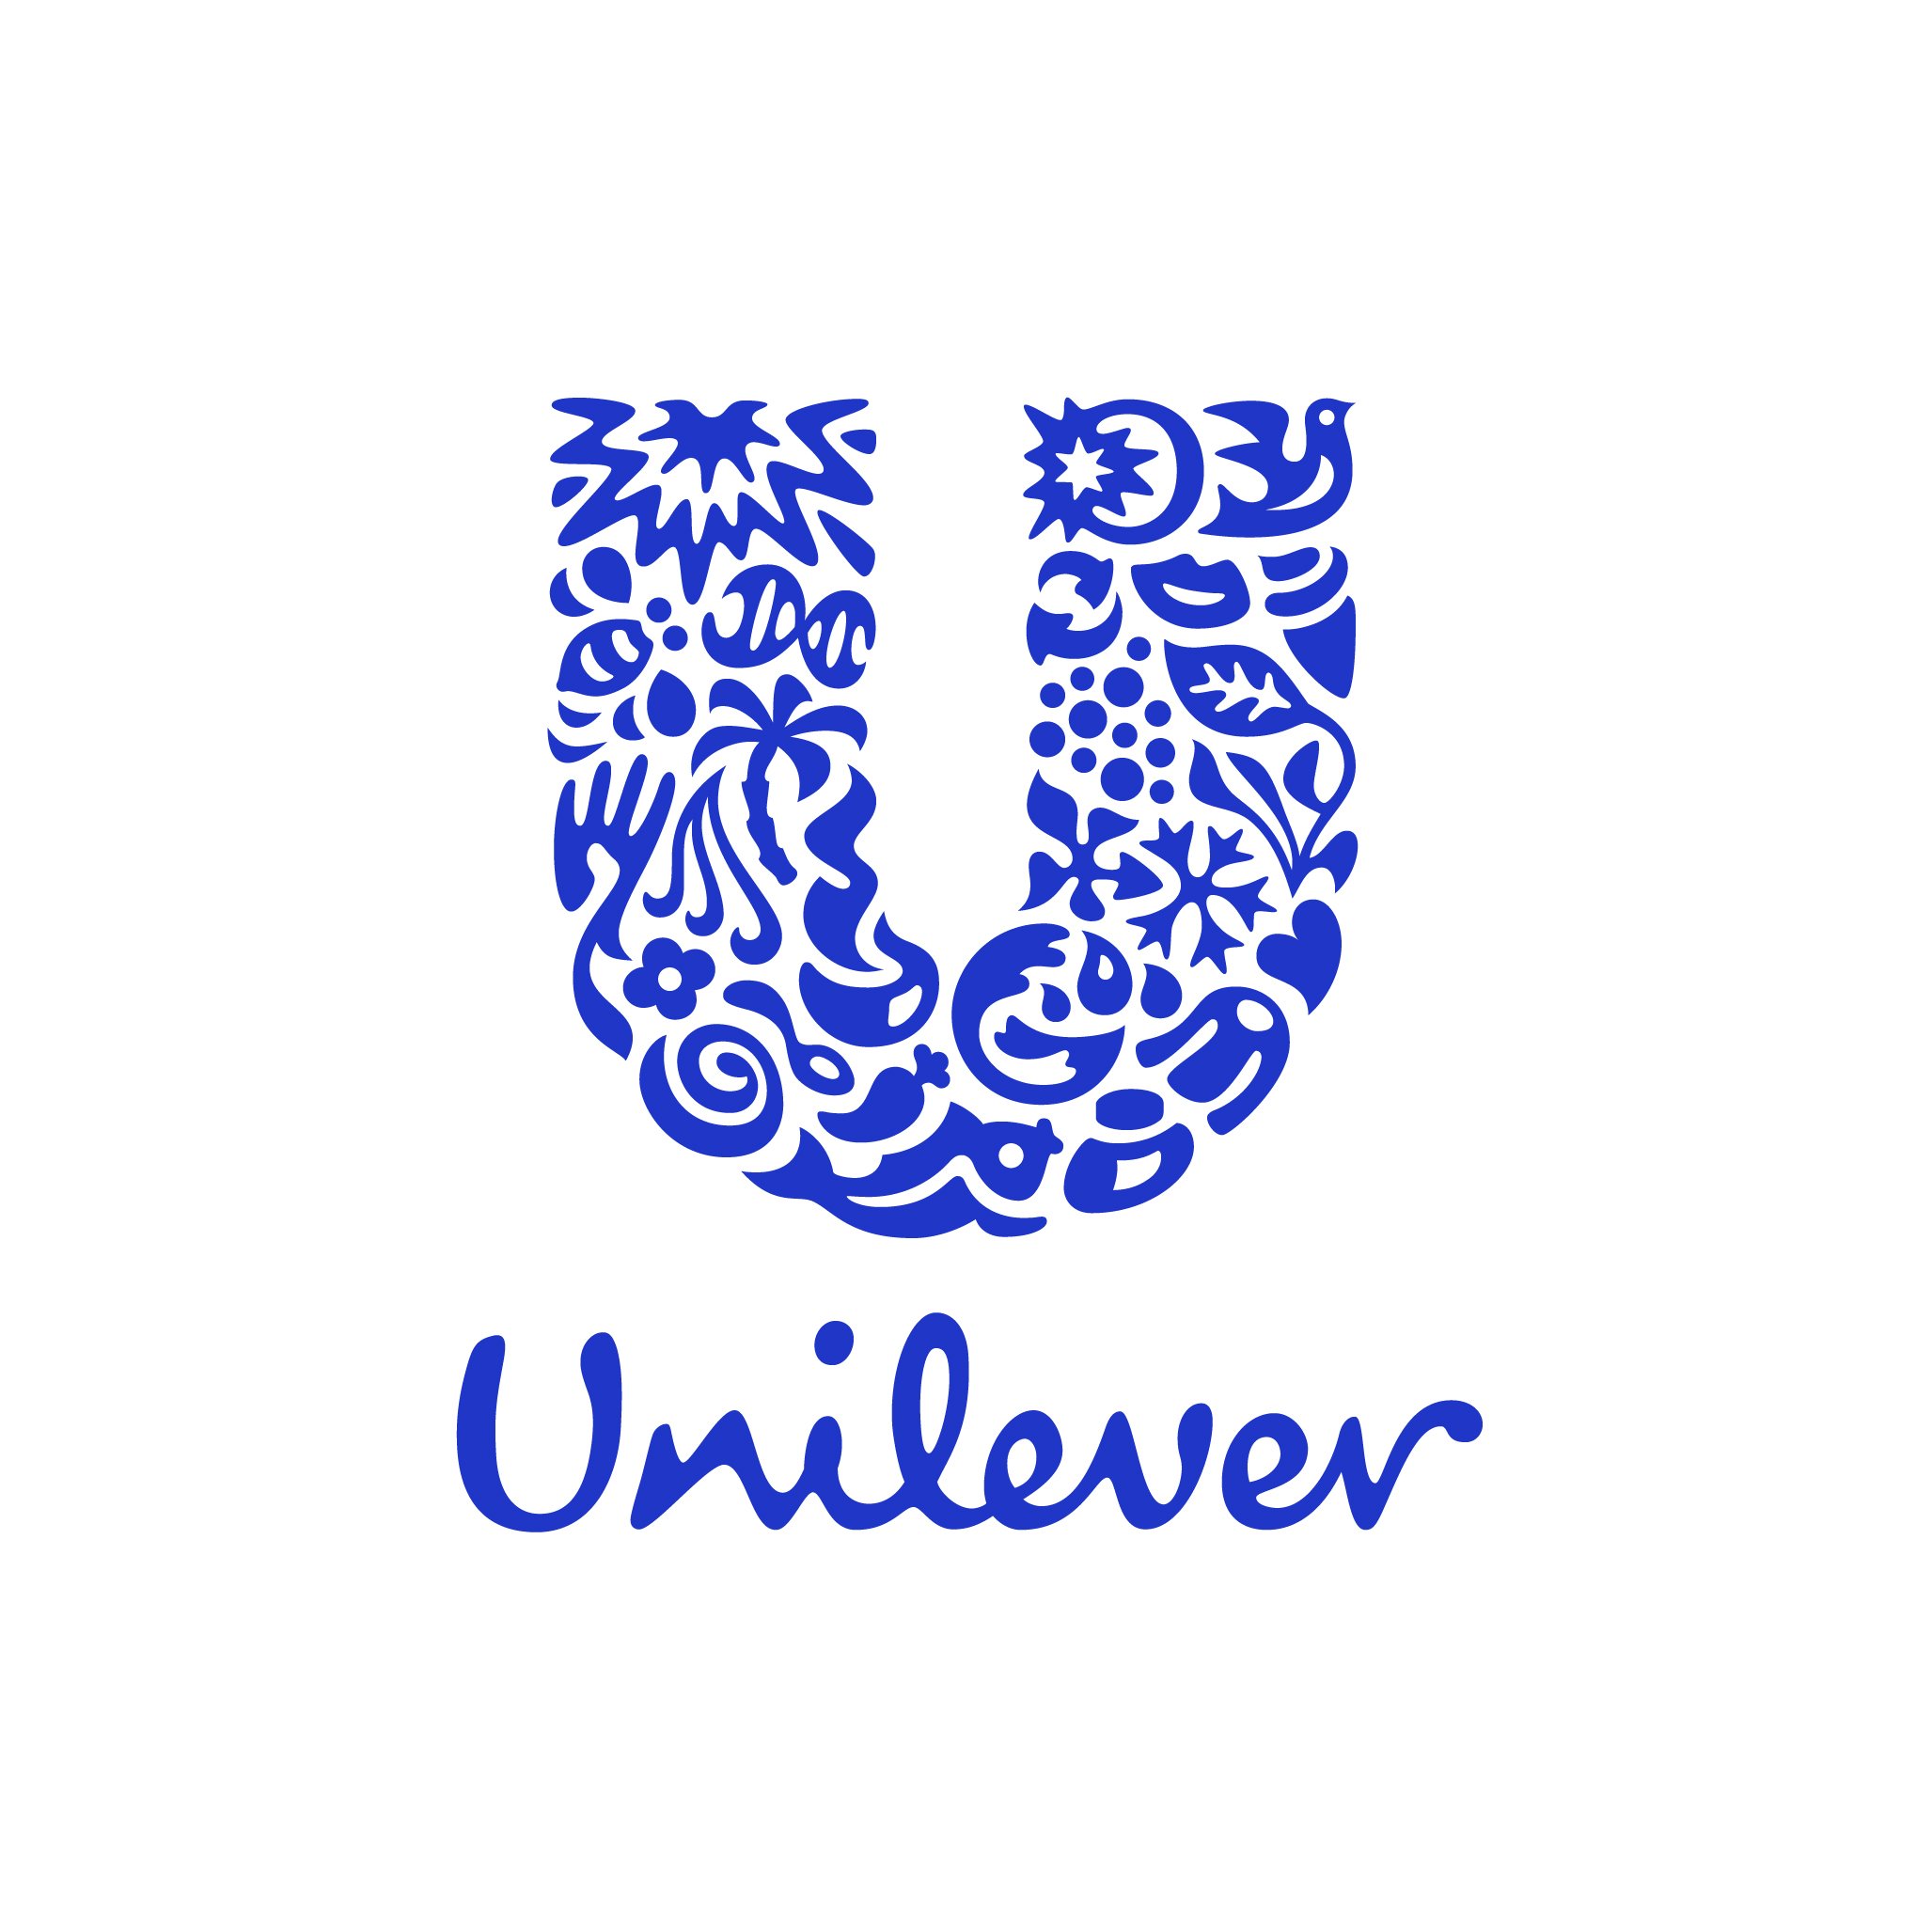 کارشناس تدارکات | Procurement Specialist (3rd Party Manufacturing) - یونیلیور | Unilever Iran